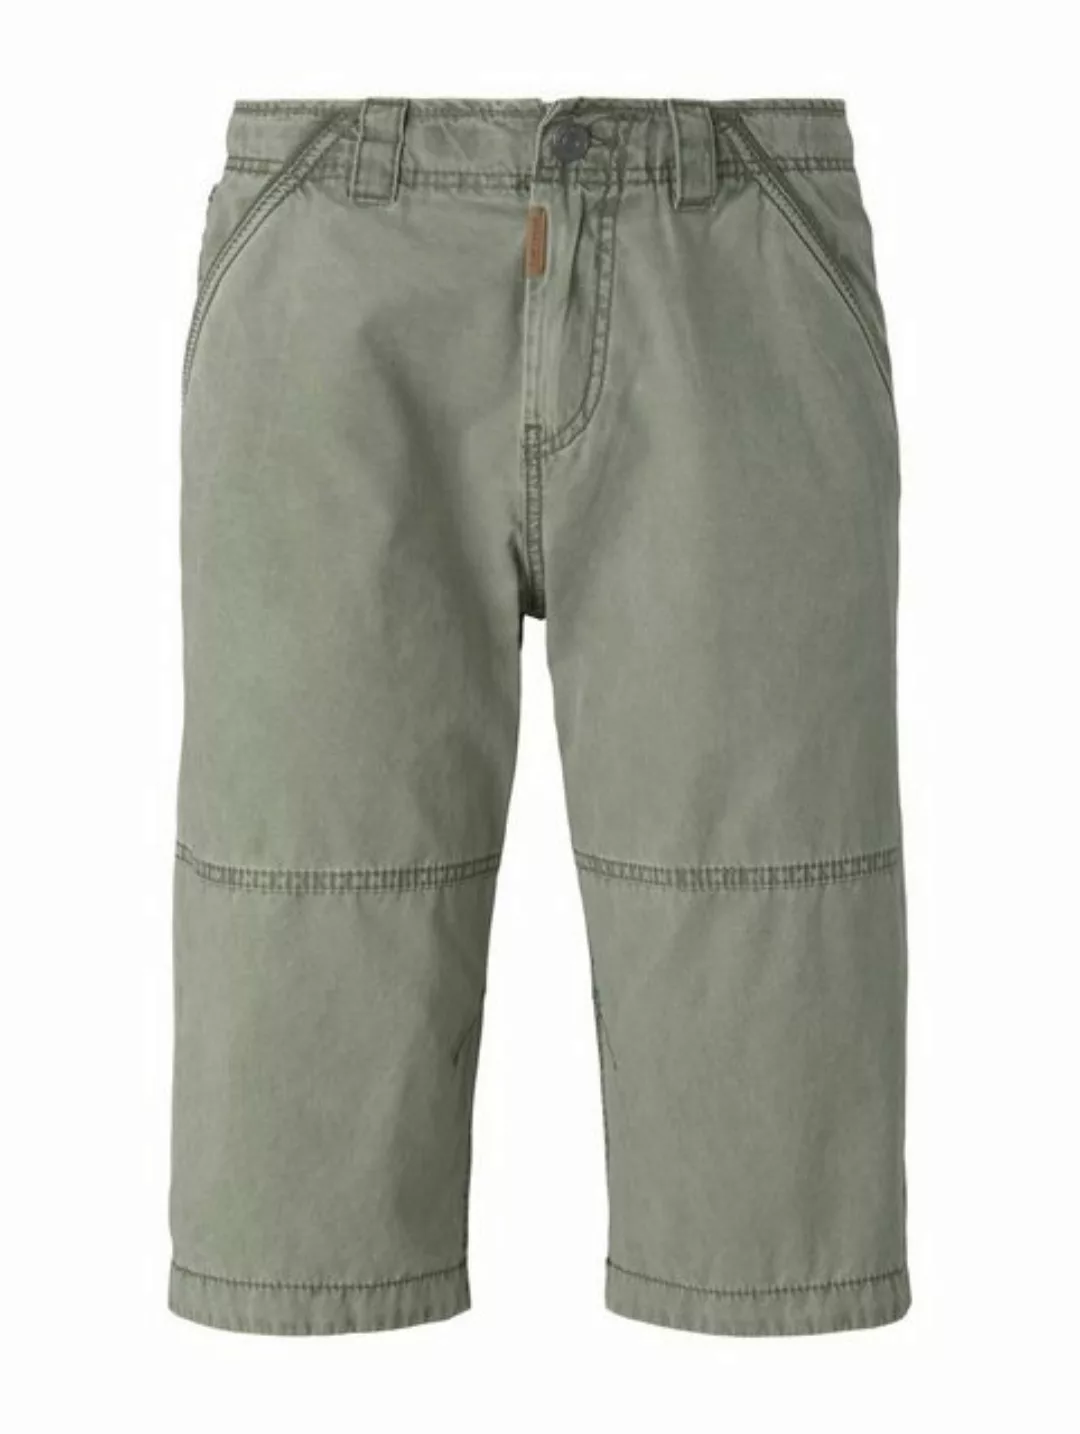 TOM TAILOR 5-Pocket-Jeans günstig online kaufen